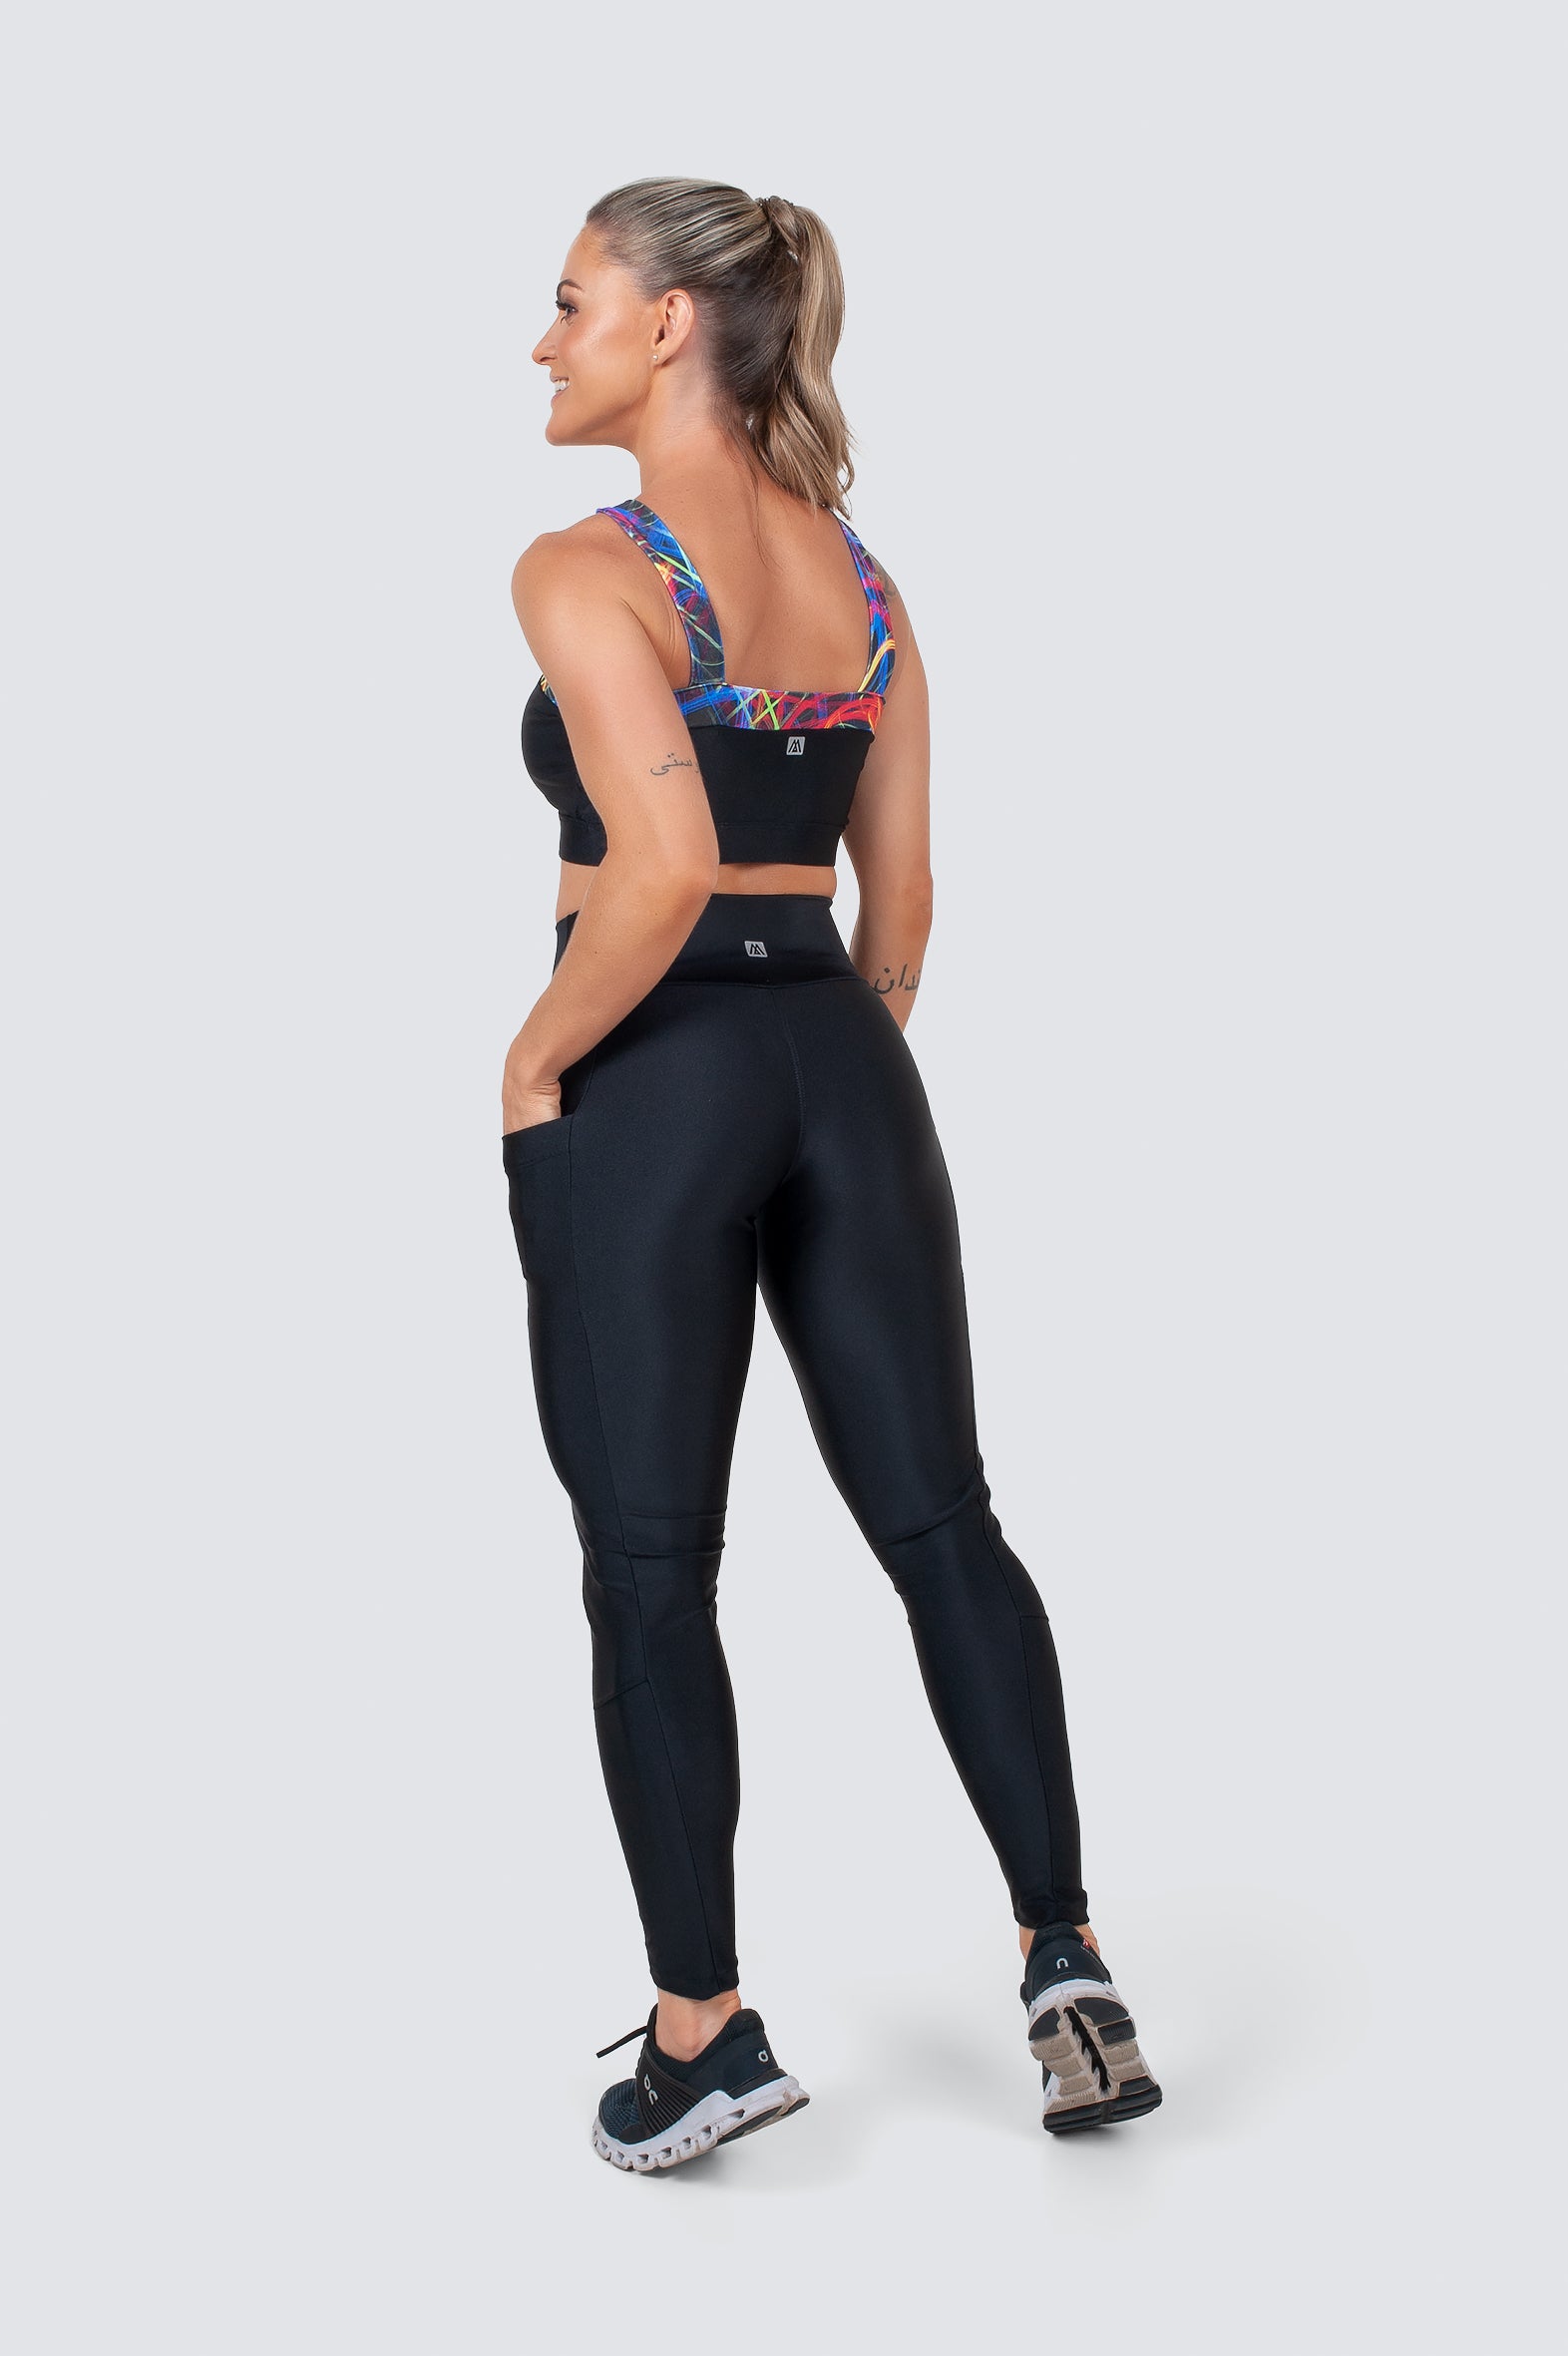 Black/Neon Lights Print Women's Glossy Front Crossed Sports Bra